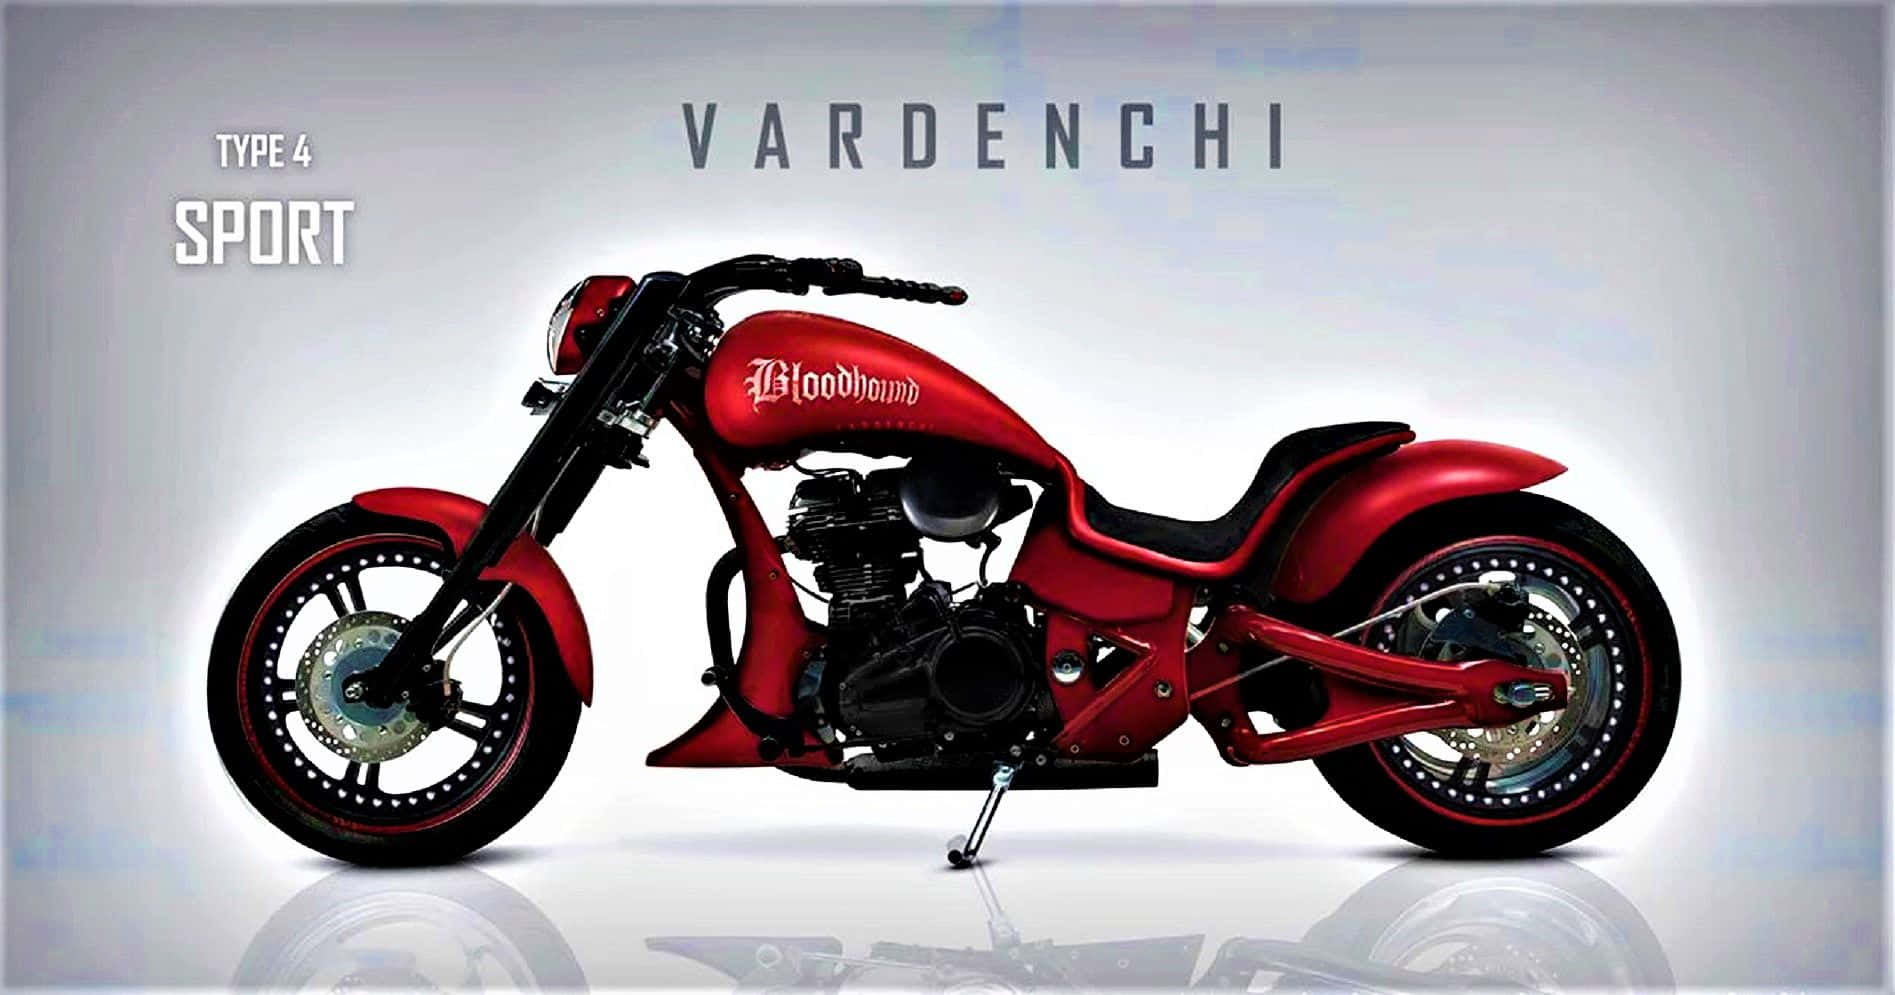 Vardenchi Type4 Sport Motorcycle Wallpaper